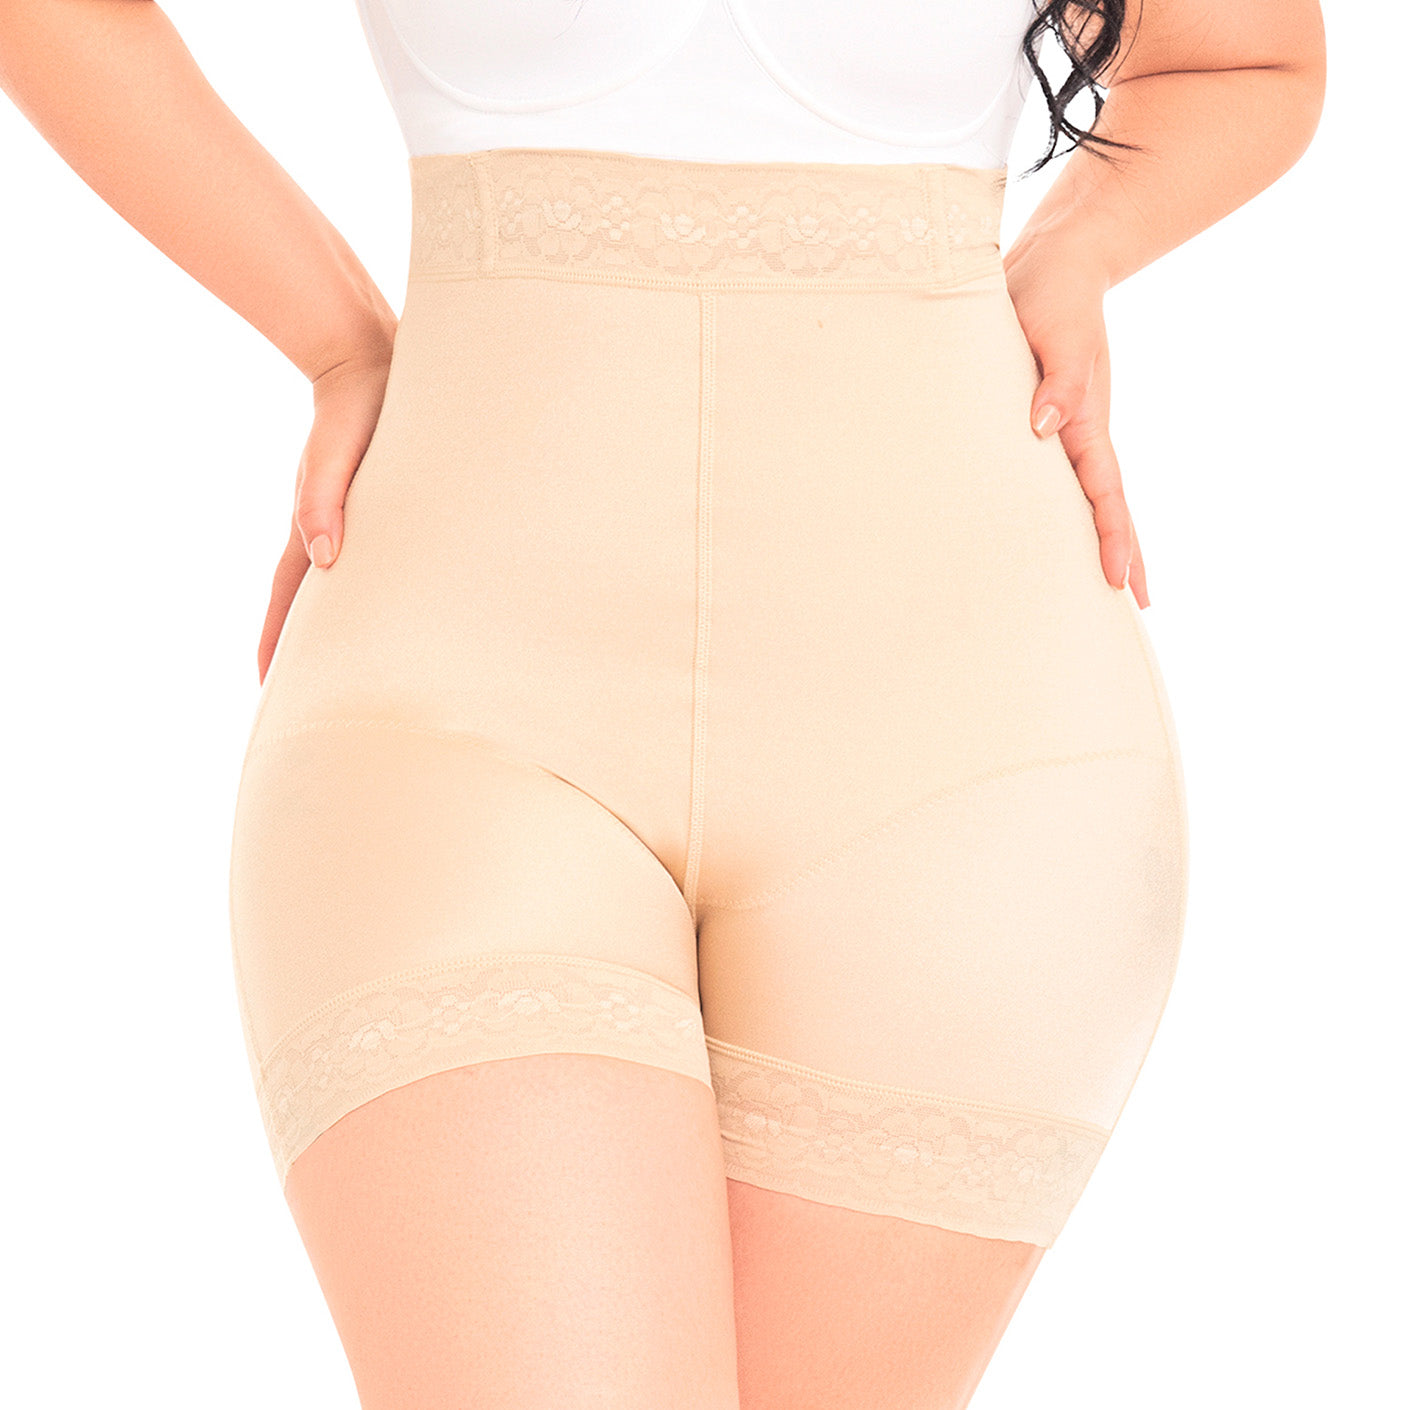 Junlan High Waist Slimming Shorts, Lace Trim High Waist Tummy Control Butt  Lifting Body Shaper, Women's Underwear & Shapewear